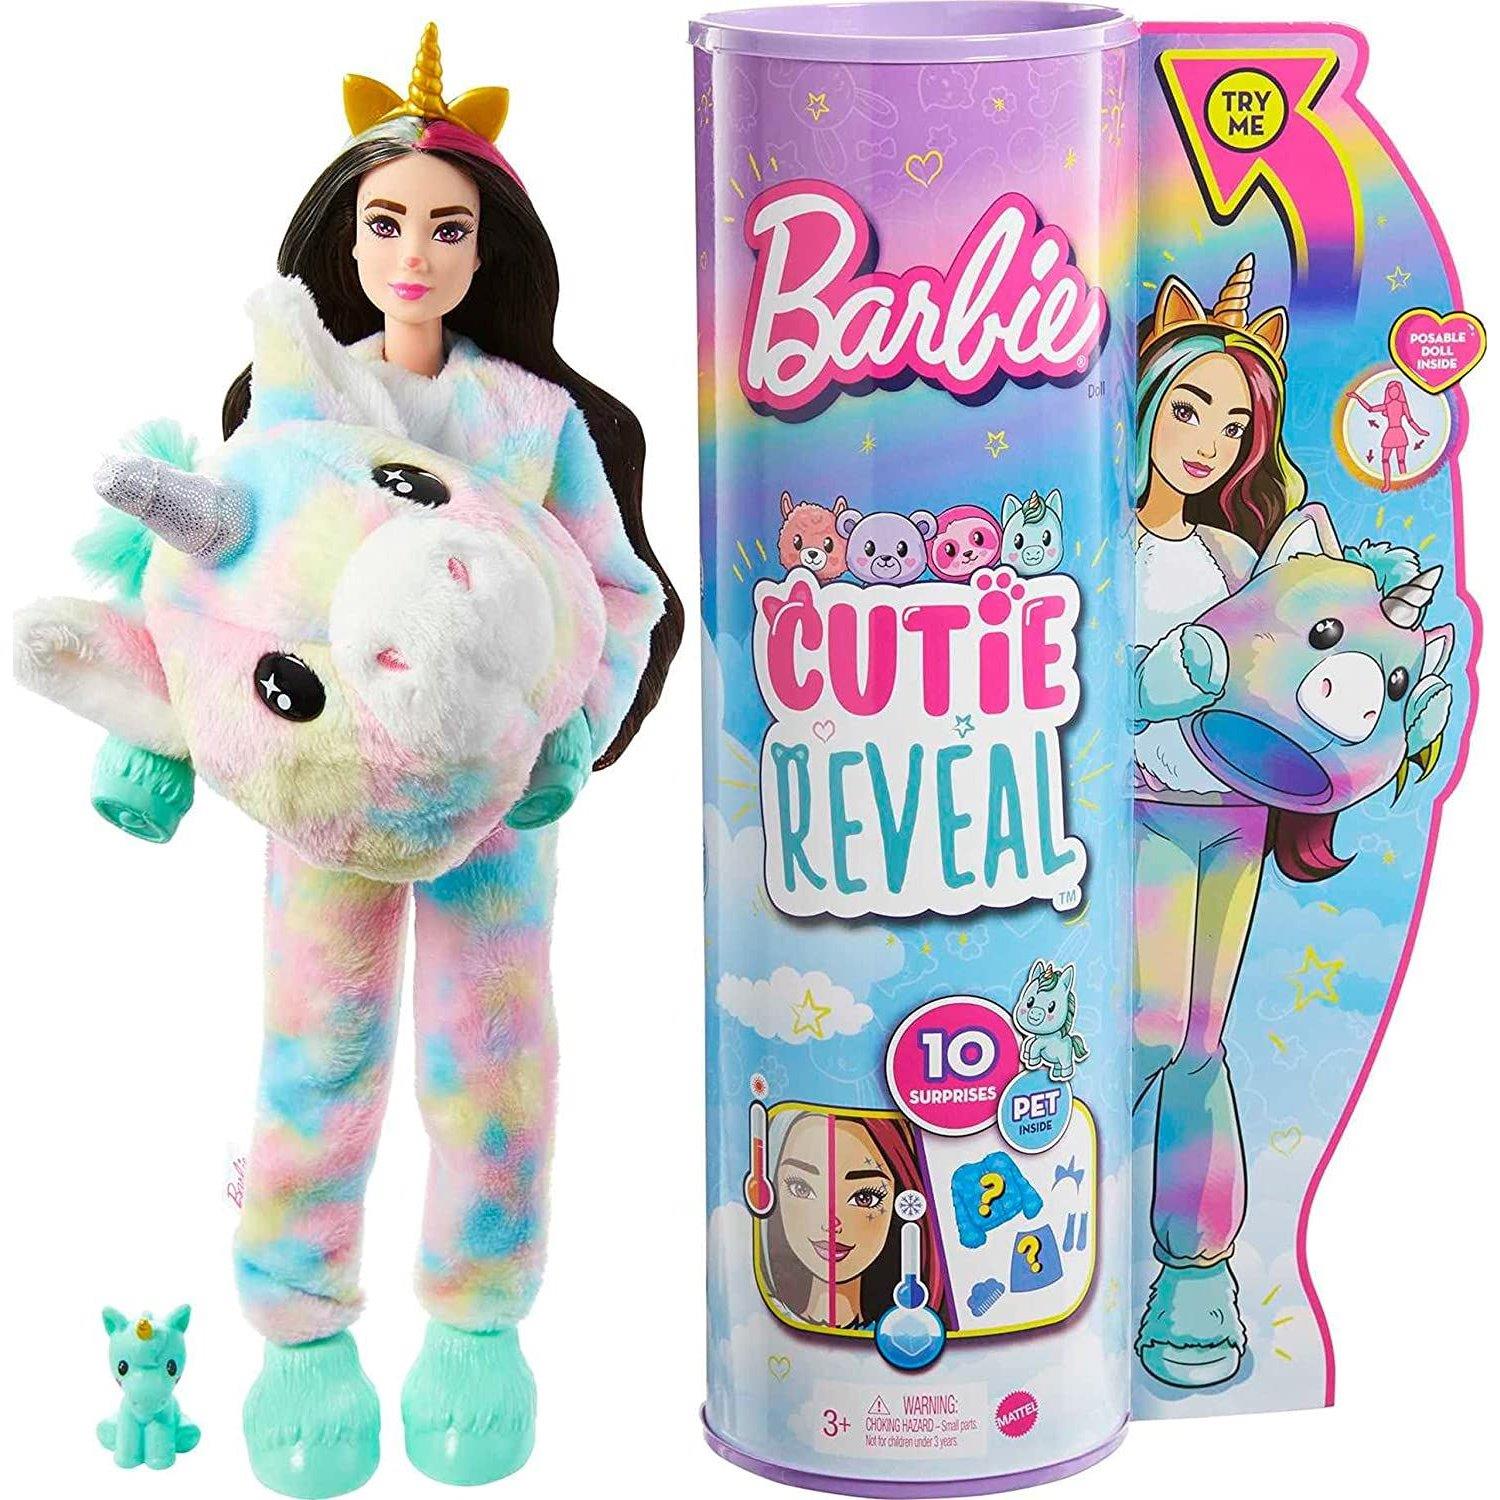 Barbie Barbie Cutie Reveal Doll with Unicorn Plush